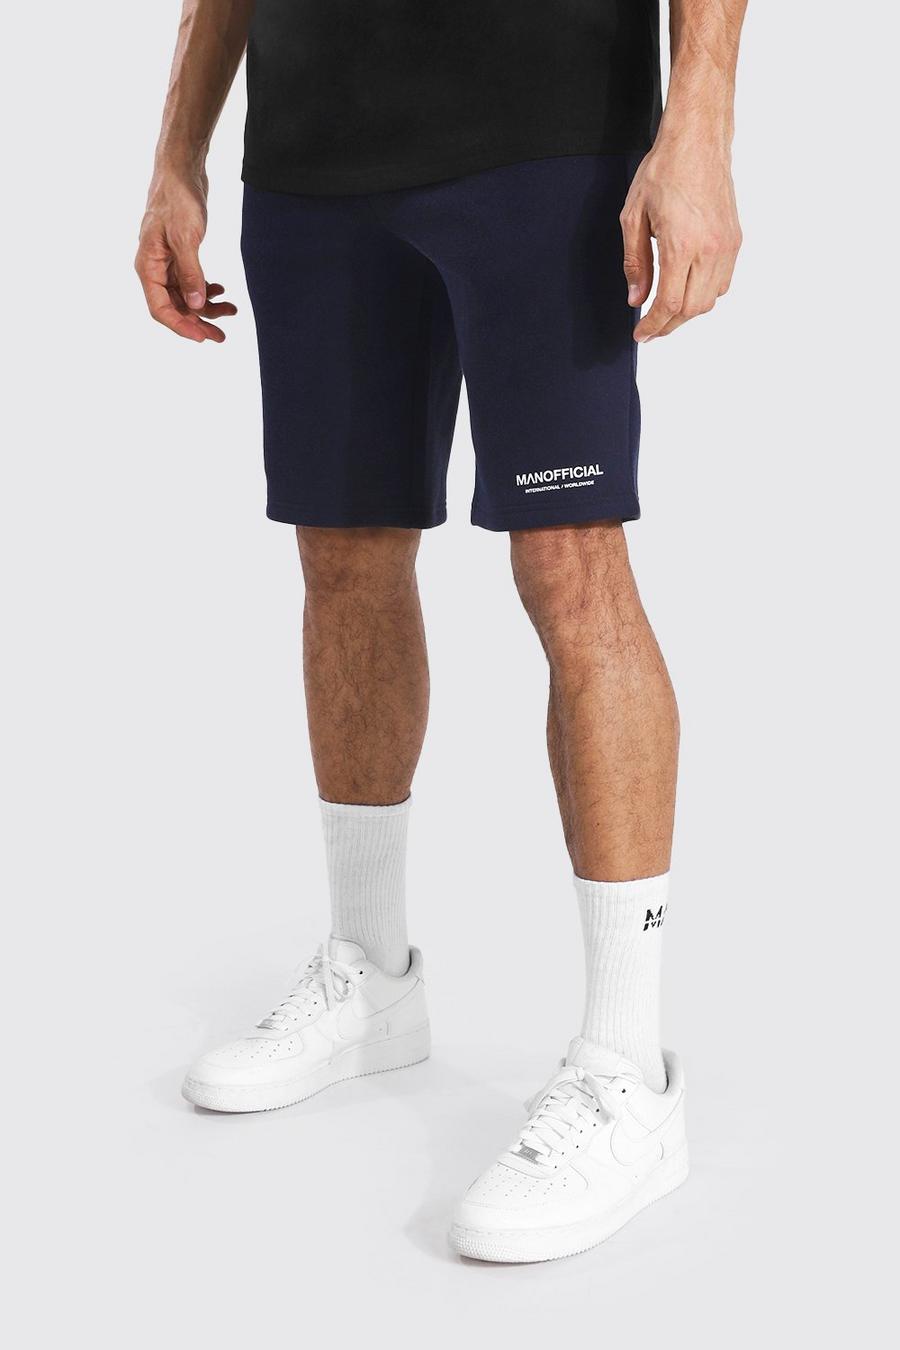 Tall Mittellange Jersey-Shorts mit Man Official-Bund, Marineblau image number 1